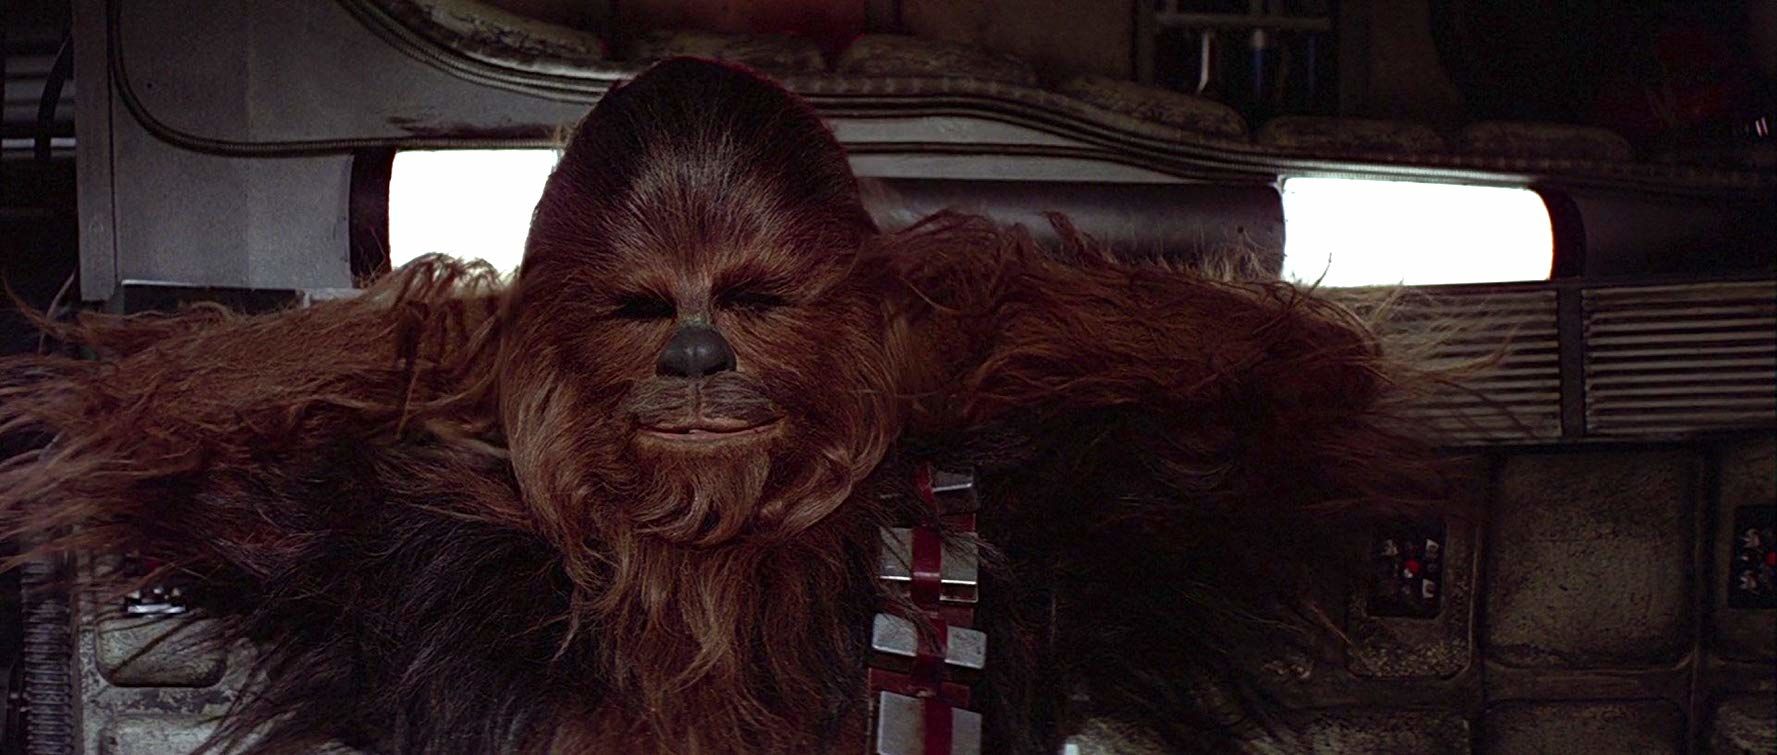 Chewbacca Empire Strikes Back Star Wars